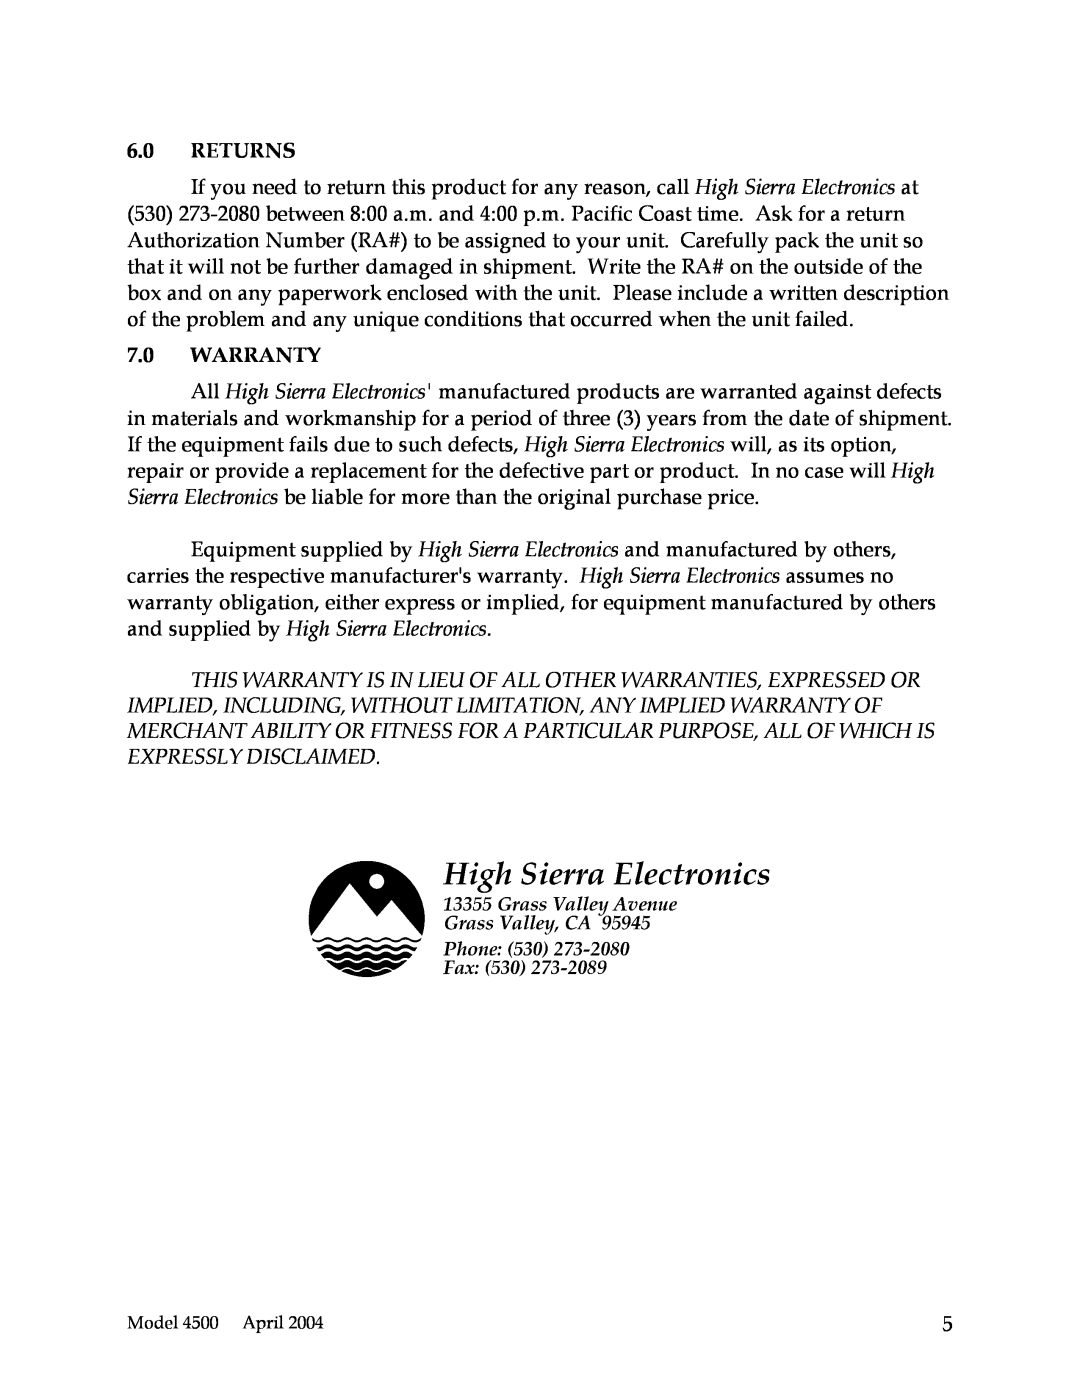 High Sierra Alert/IFlows VHF Data Receiver, 4500 instruction manual 6.0RETURNS, 7.0WARRANTY 